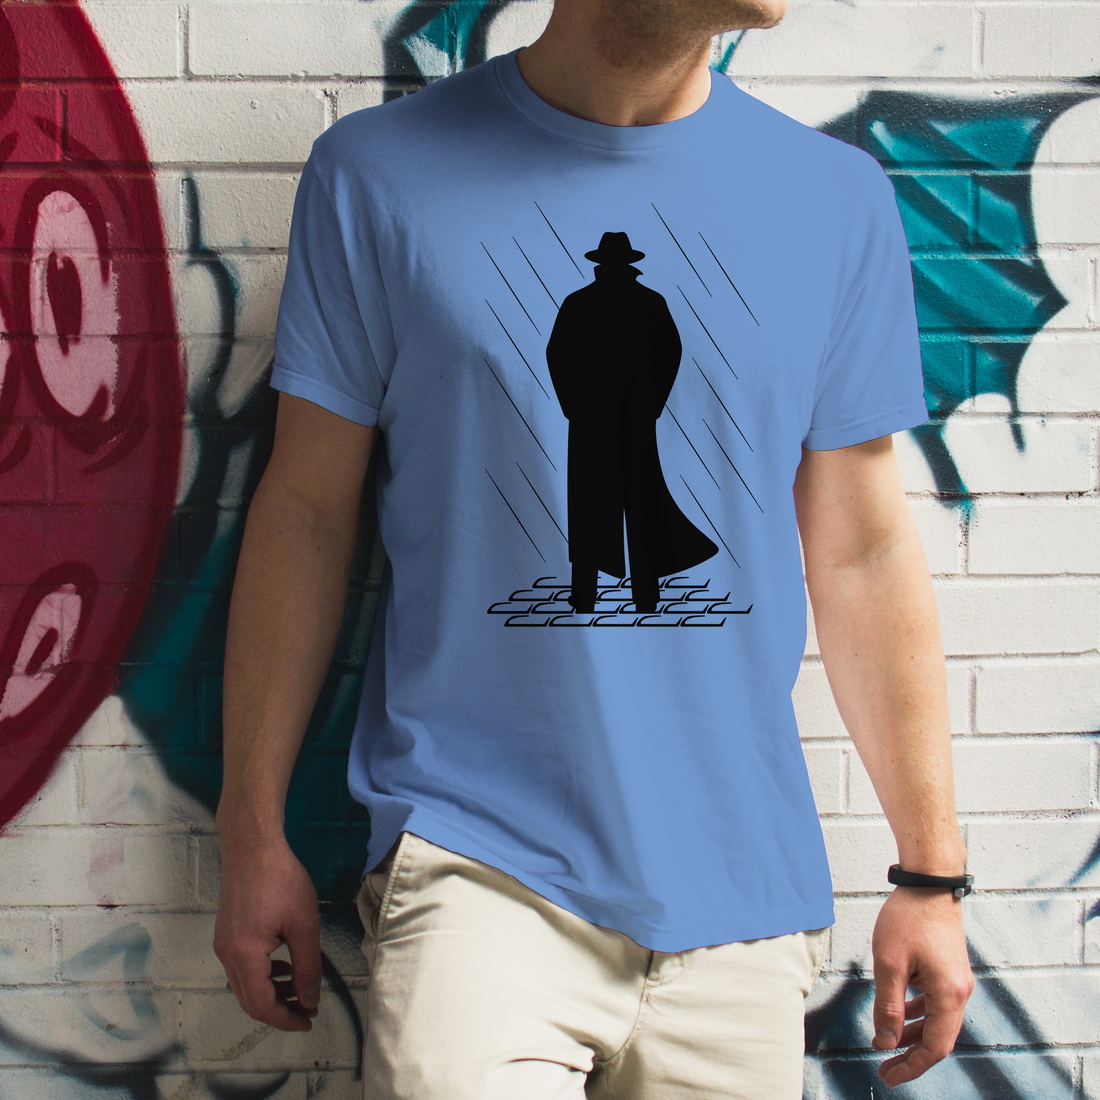 Man T-Shirt Sublimation preview image.